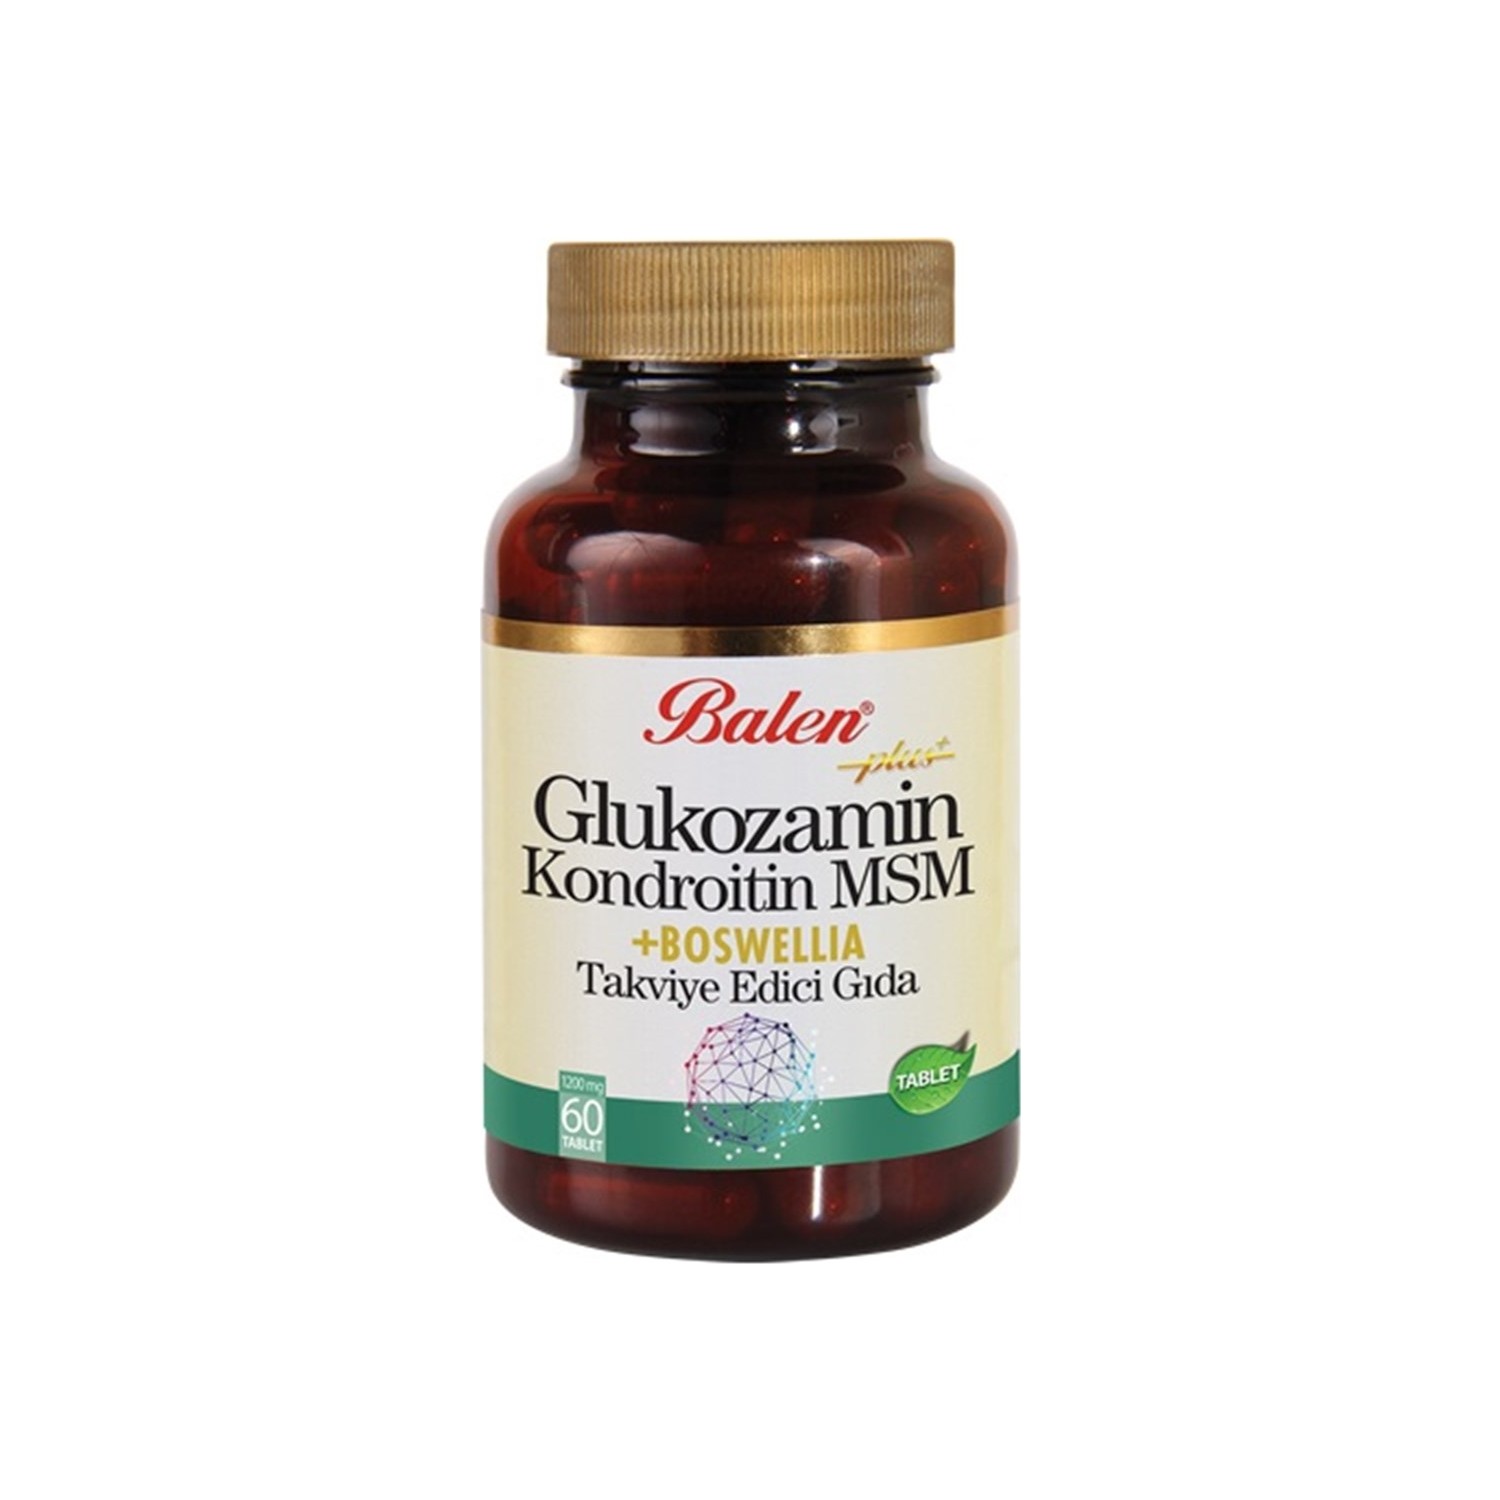 Активная добавка глюкозамин Balen Chondroitin Msm и Boswellia, 60 капсул, 1200 мг kal glucosamine chondroitin msm глюкозамин хондроитин мсм 60 таблеток kal